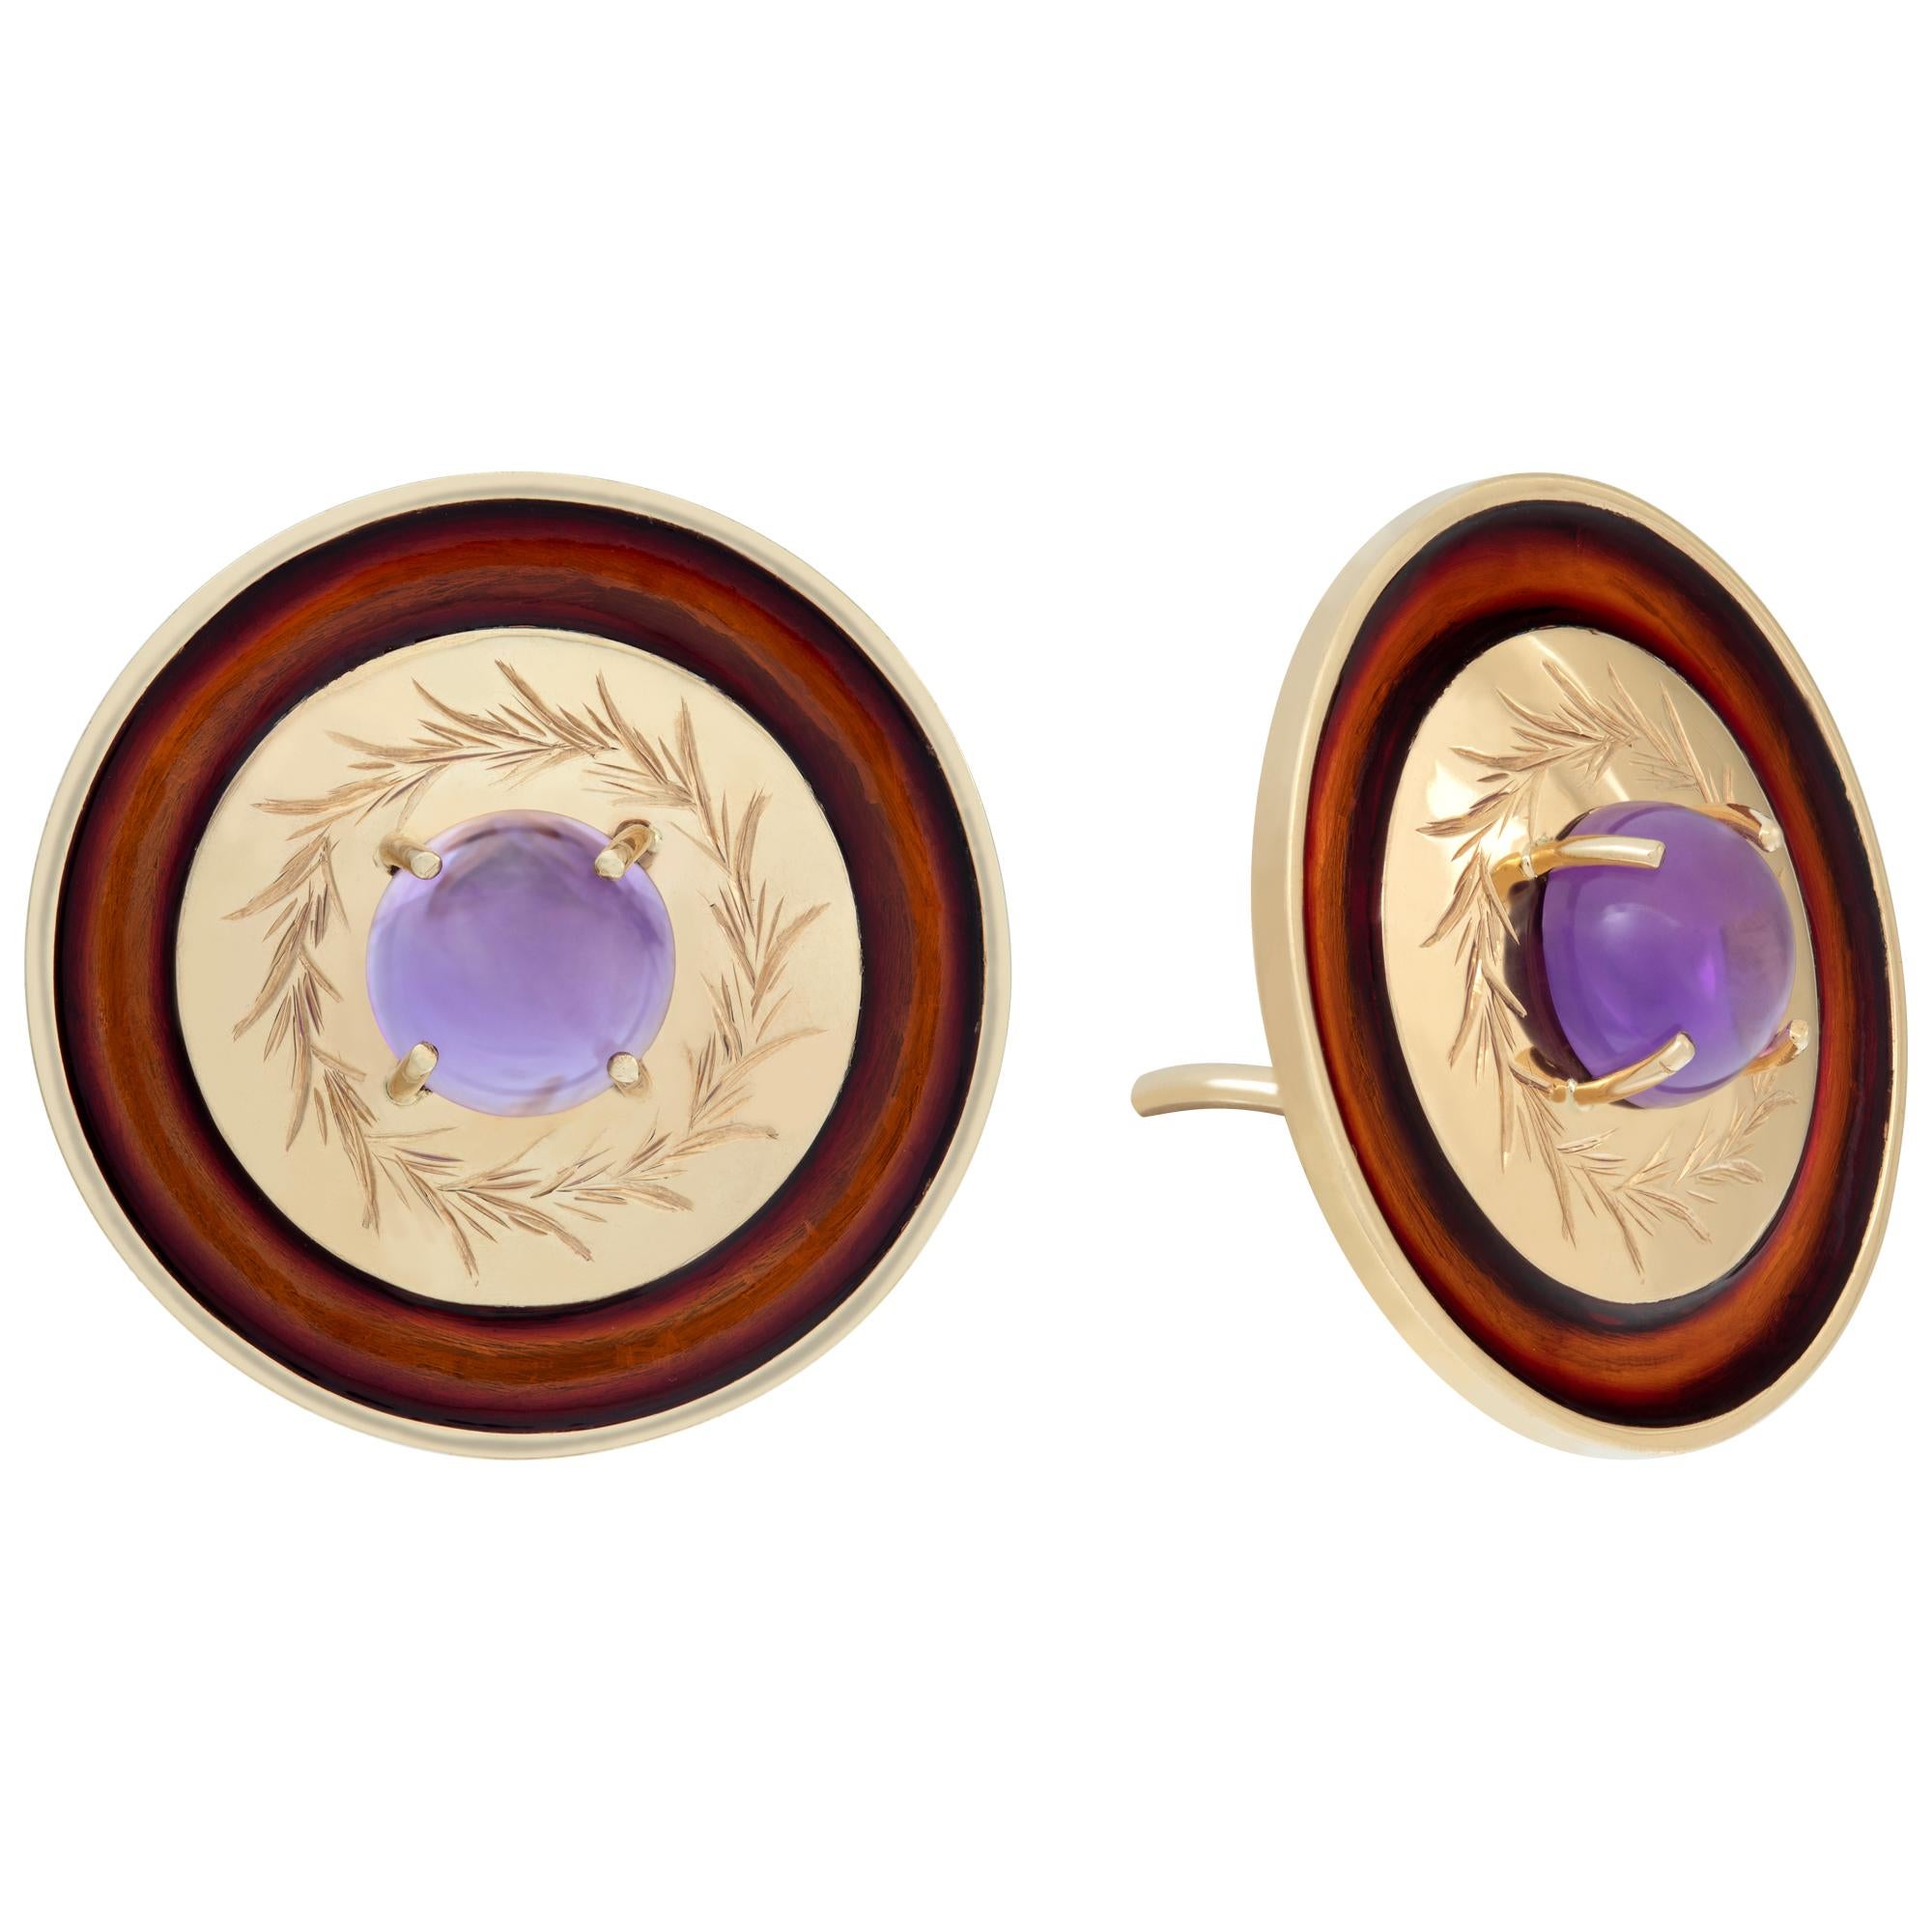 Black enamel & cabochon amethyst disc earrings in 14k. Diameter is 1